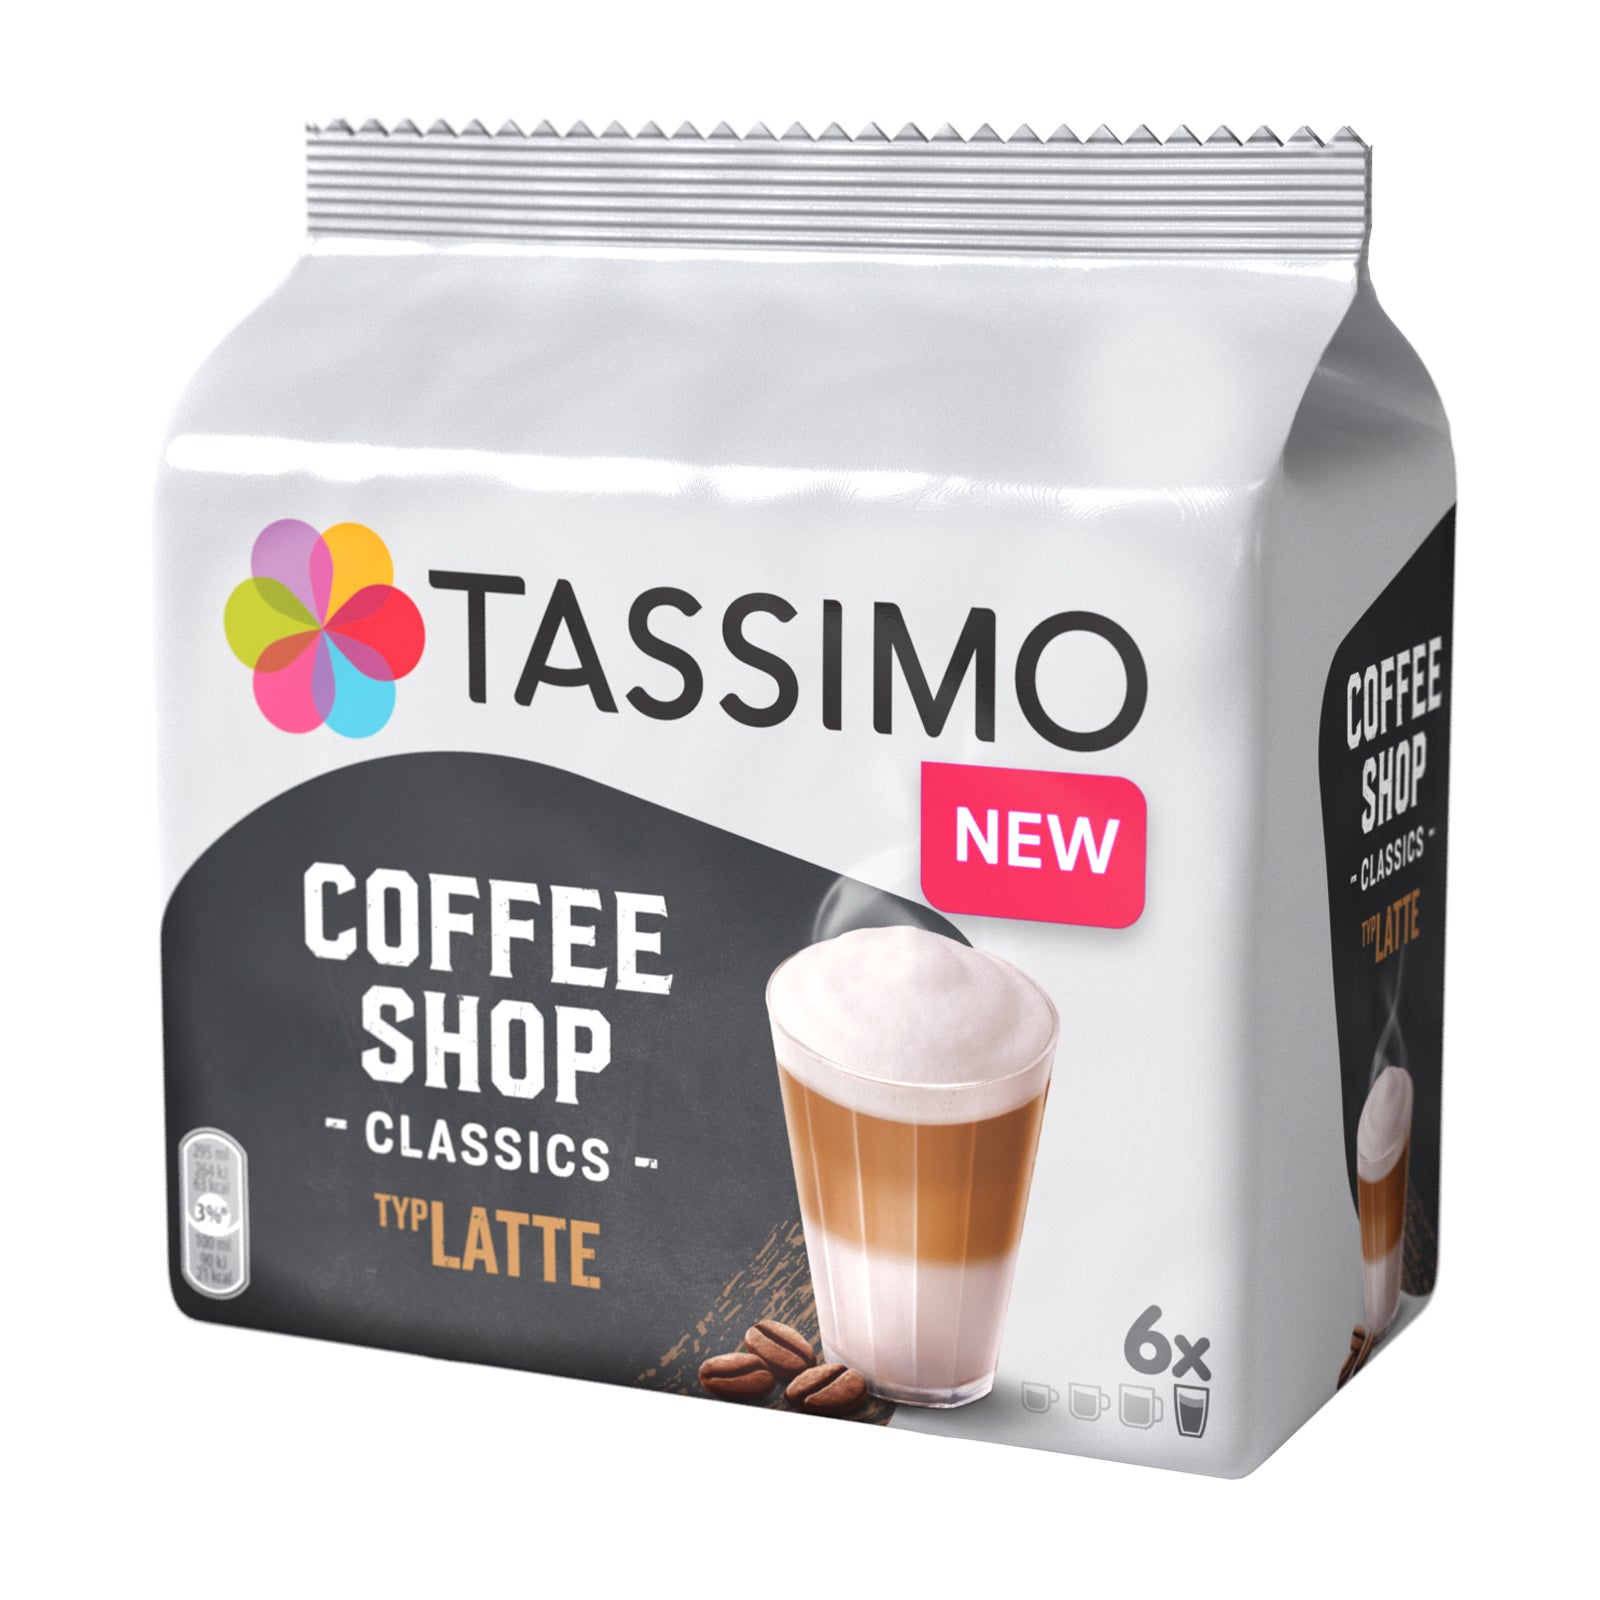 Tassimo Coffee Shop Classics Latte Coffee Pods